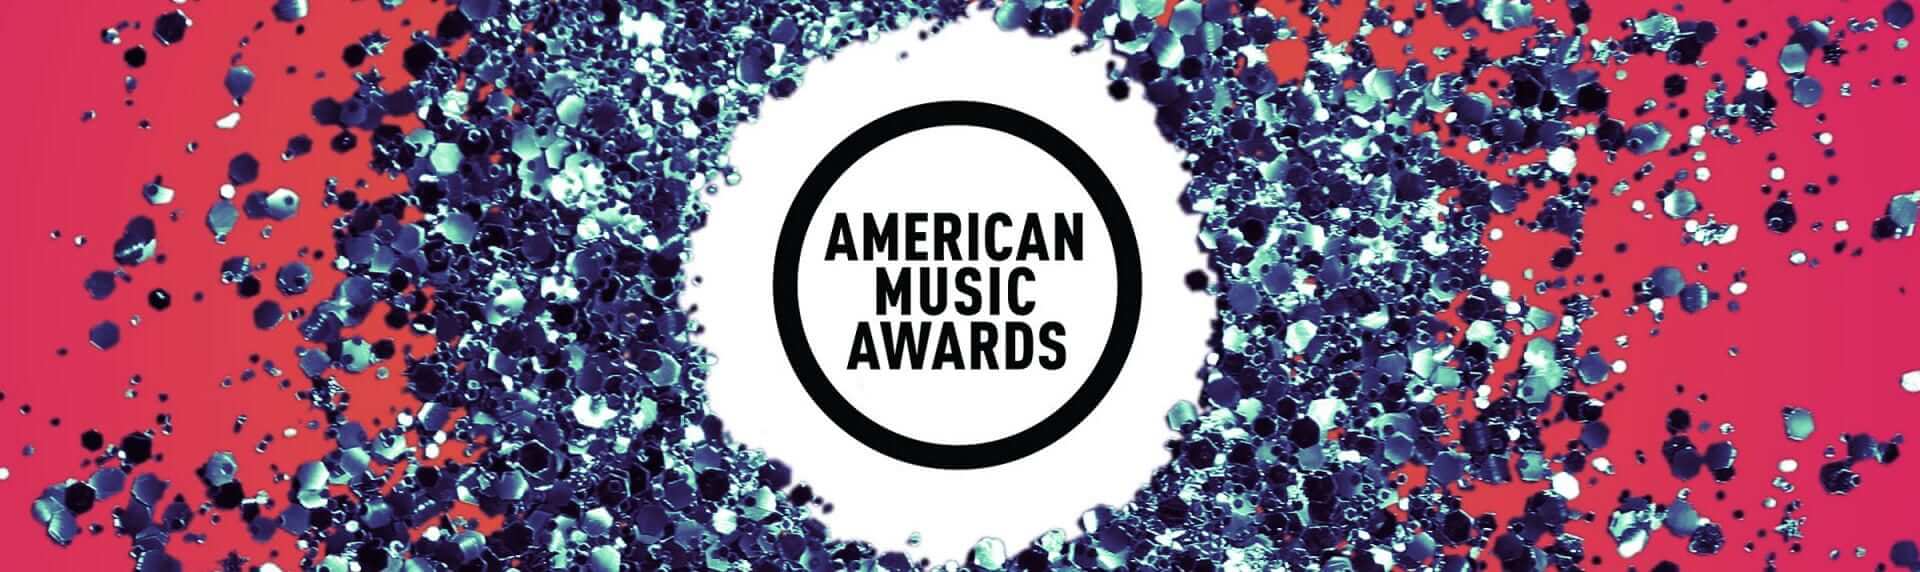 American Music Awards Advertisement